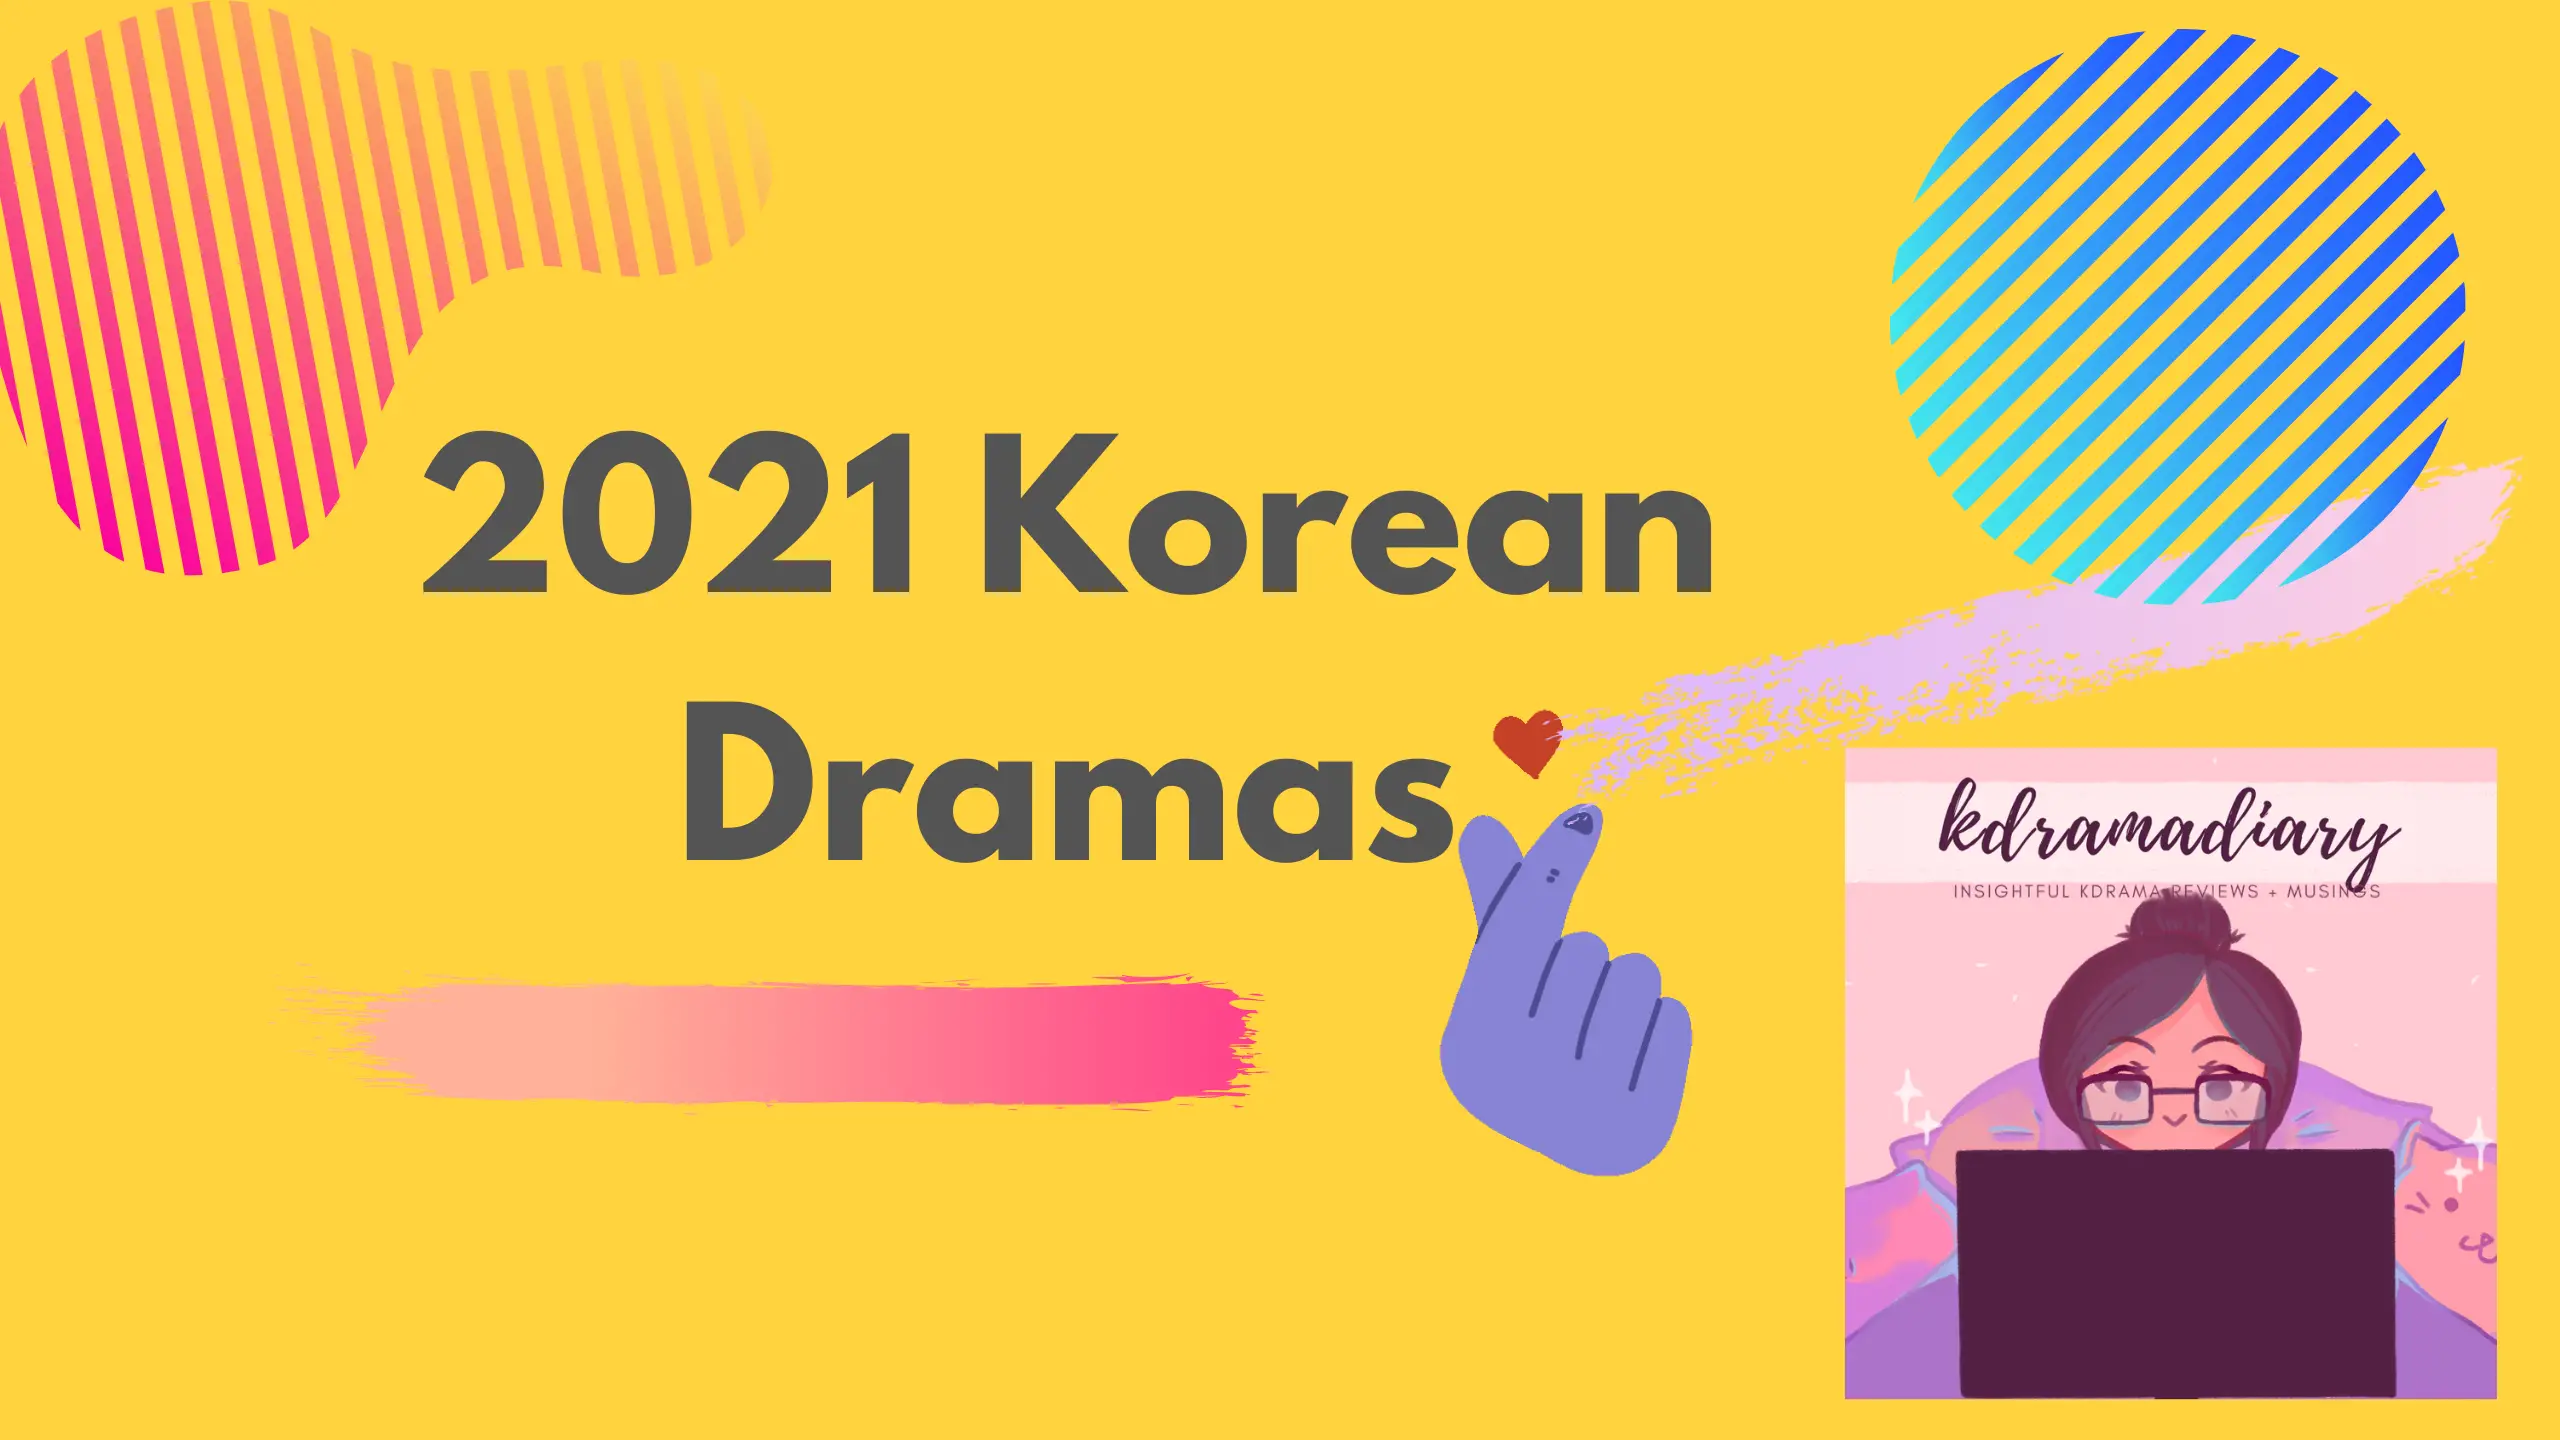 2021 Korean Dramas